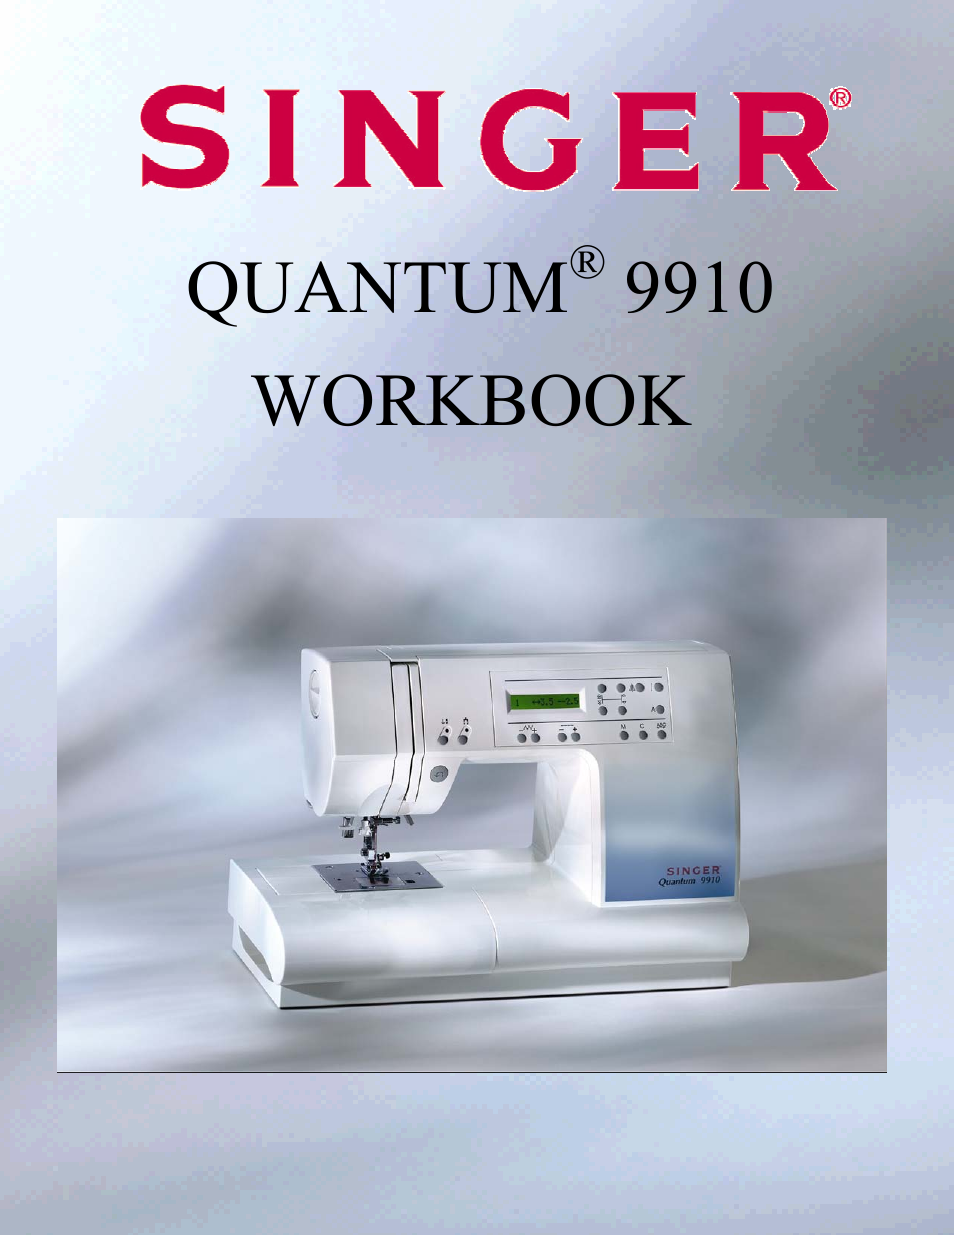 SINGER 9910-WORKBOOK Quantum User Manual | 64 pages